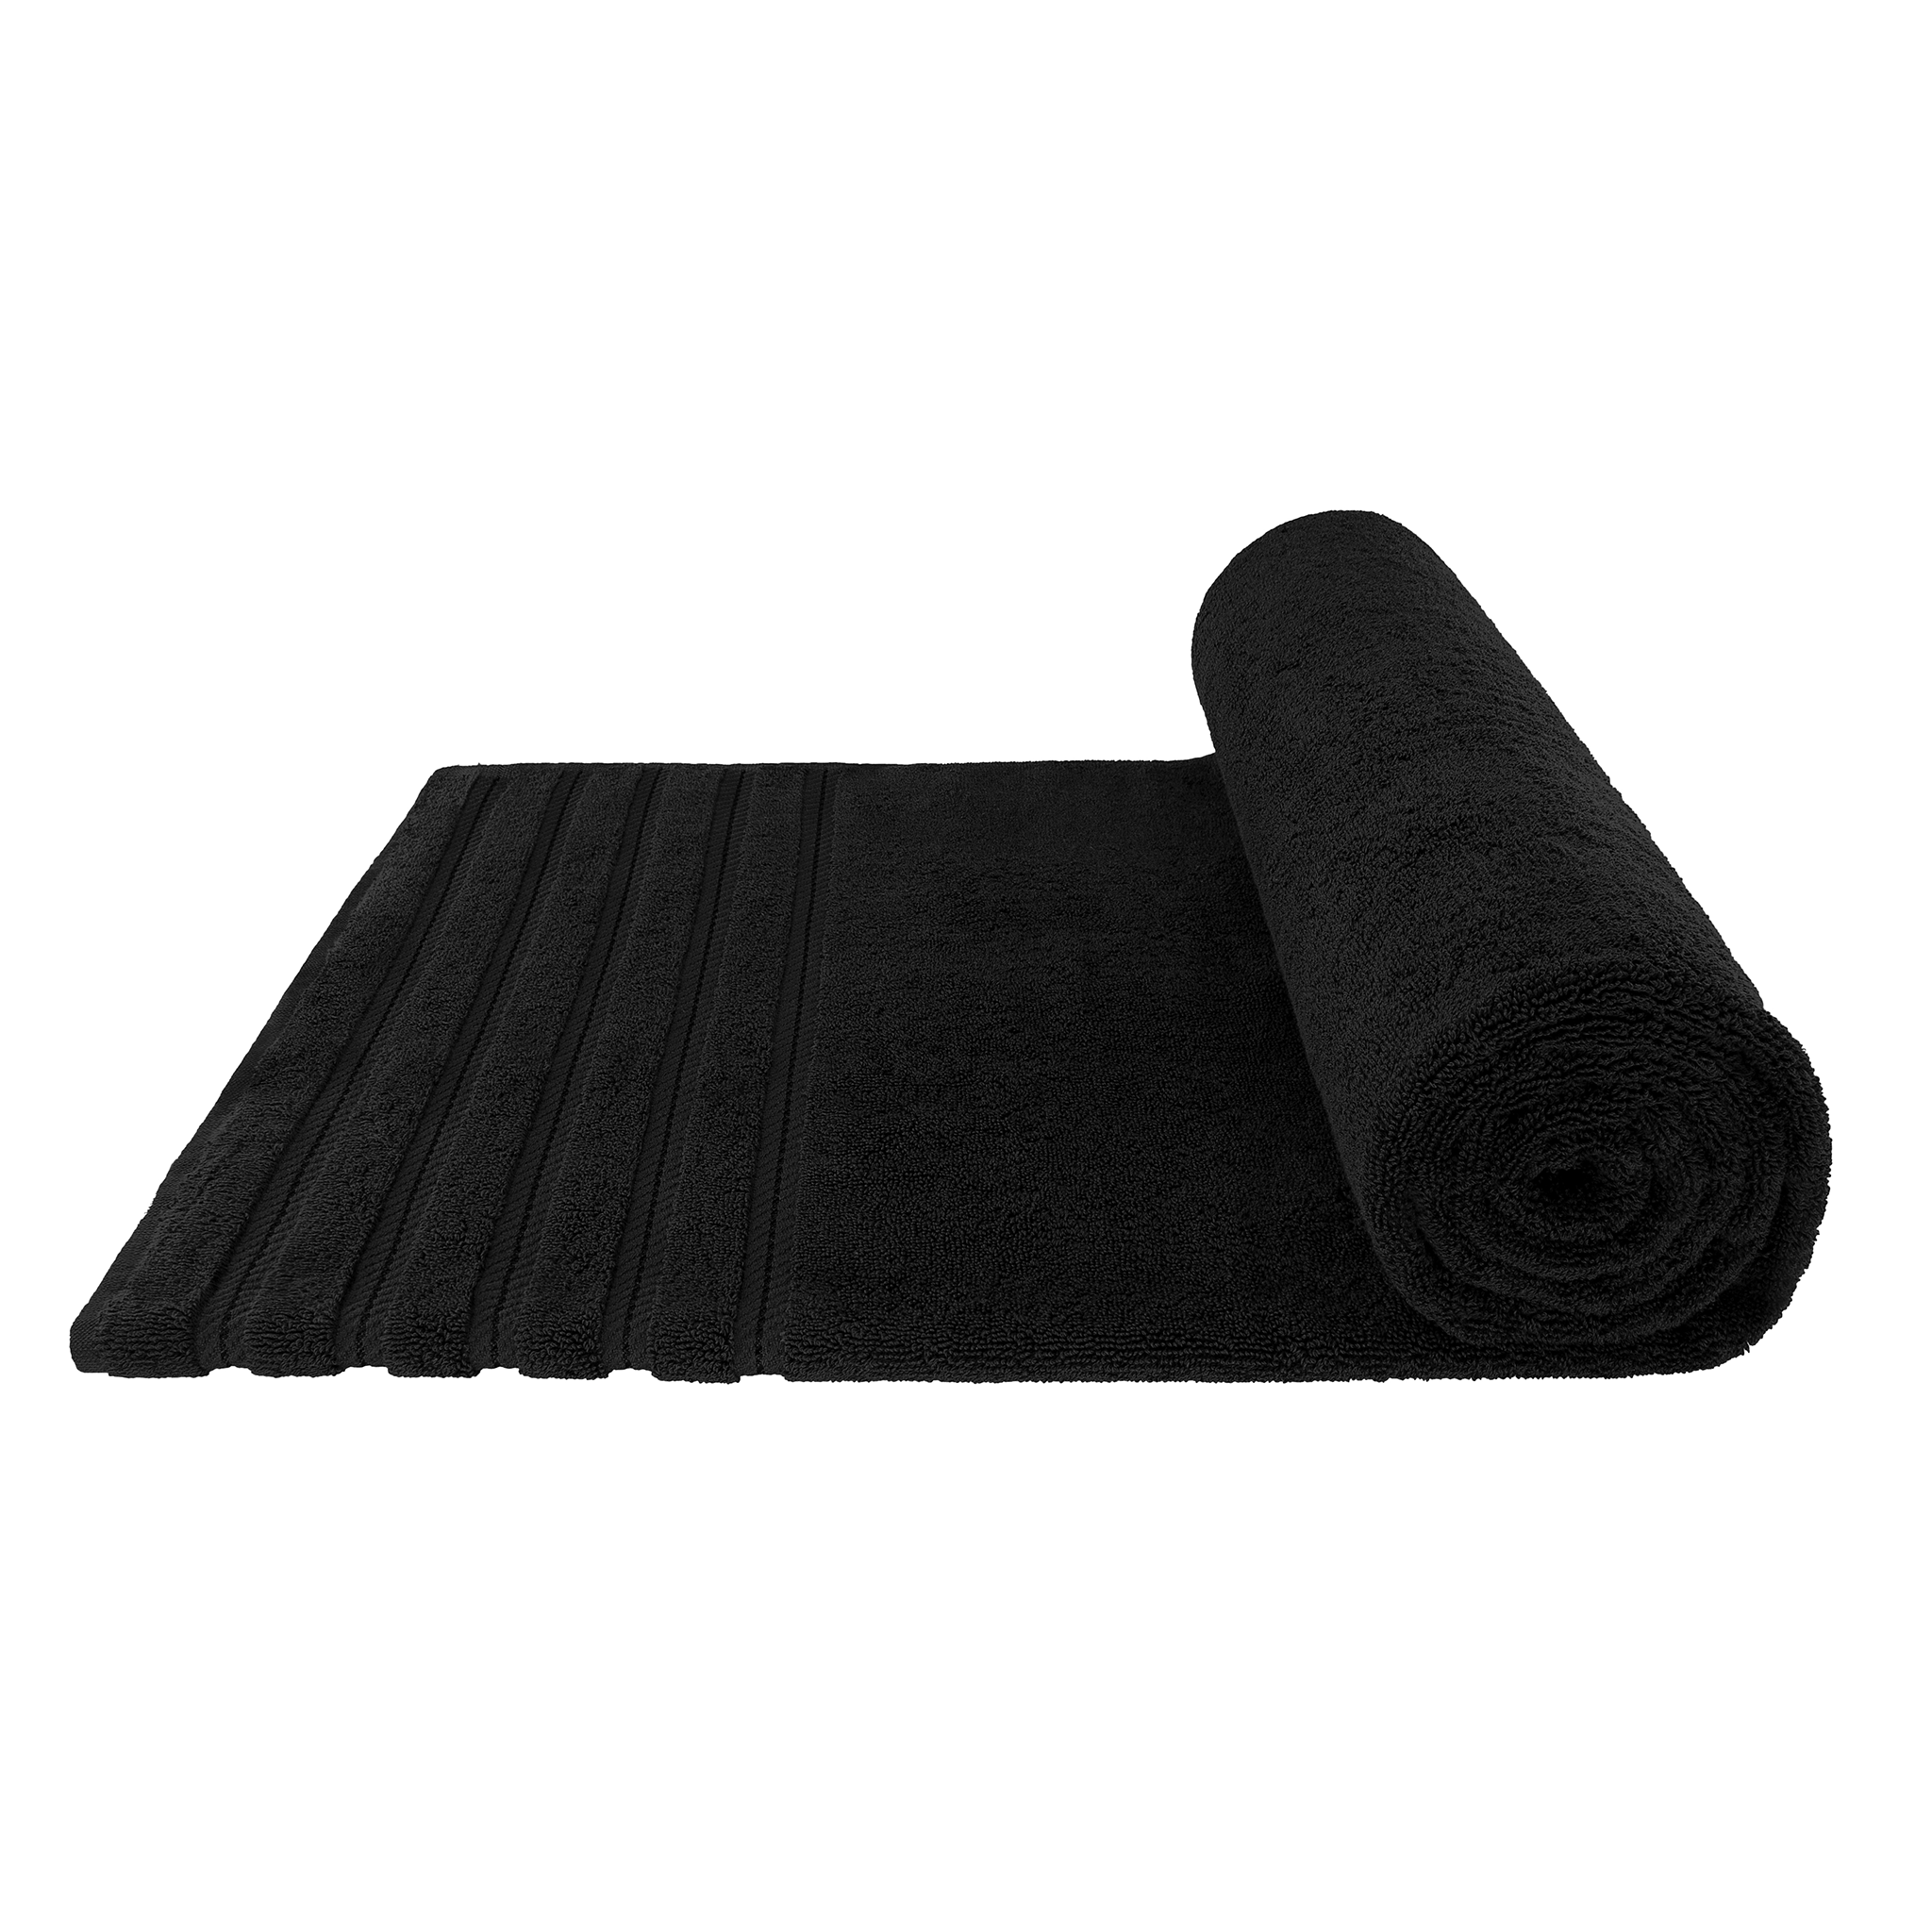 American Soft Linen - 35x70 Jumbo Bath Sheet Turkish Bath Towel - 16 Piece Case Pack - Black - 6